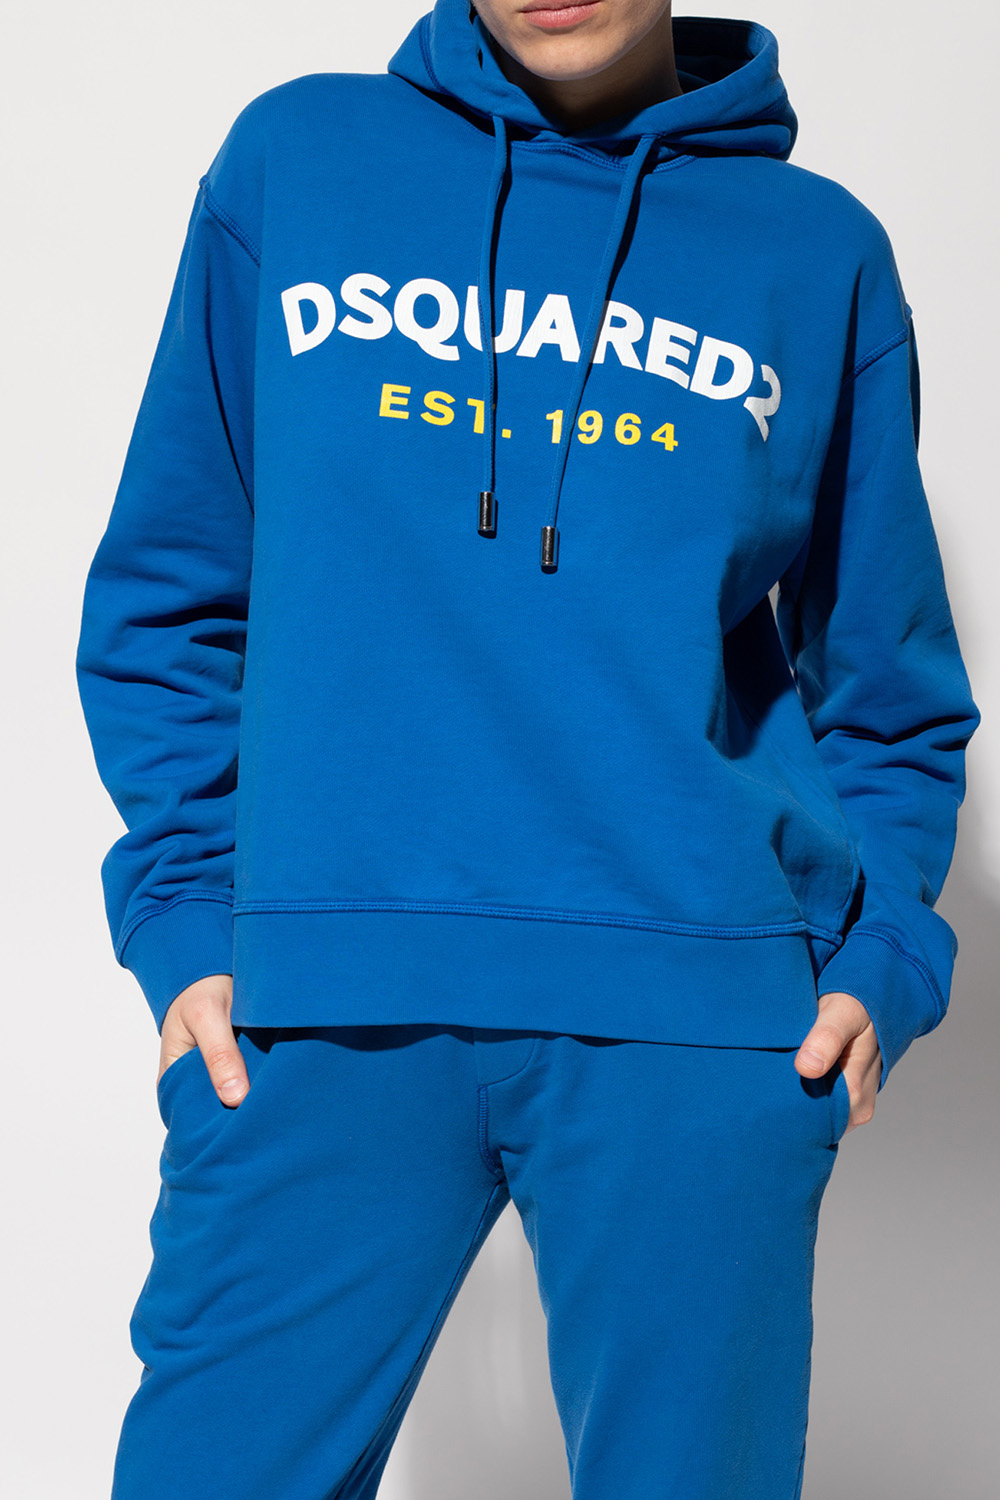 Dsquared2 Logo | Women's Clothing - IetpShops | printed hoodie 